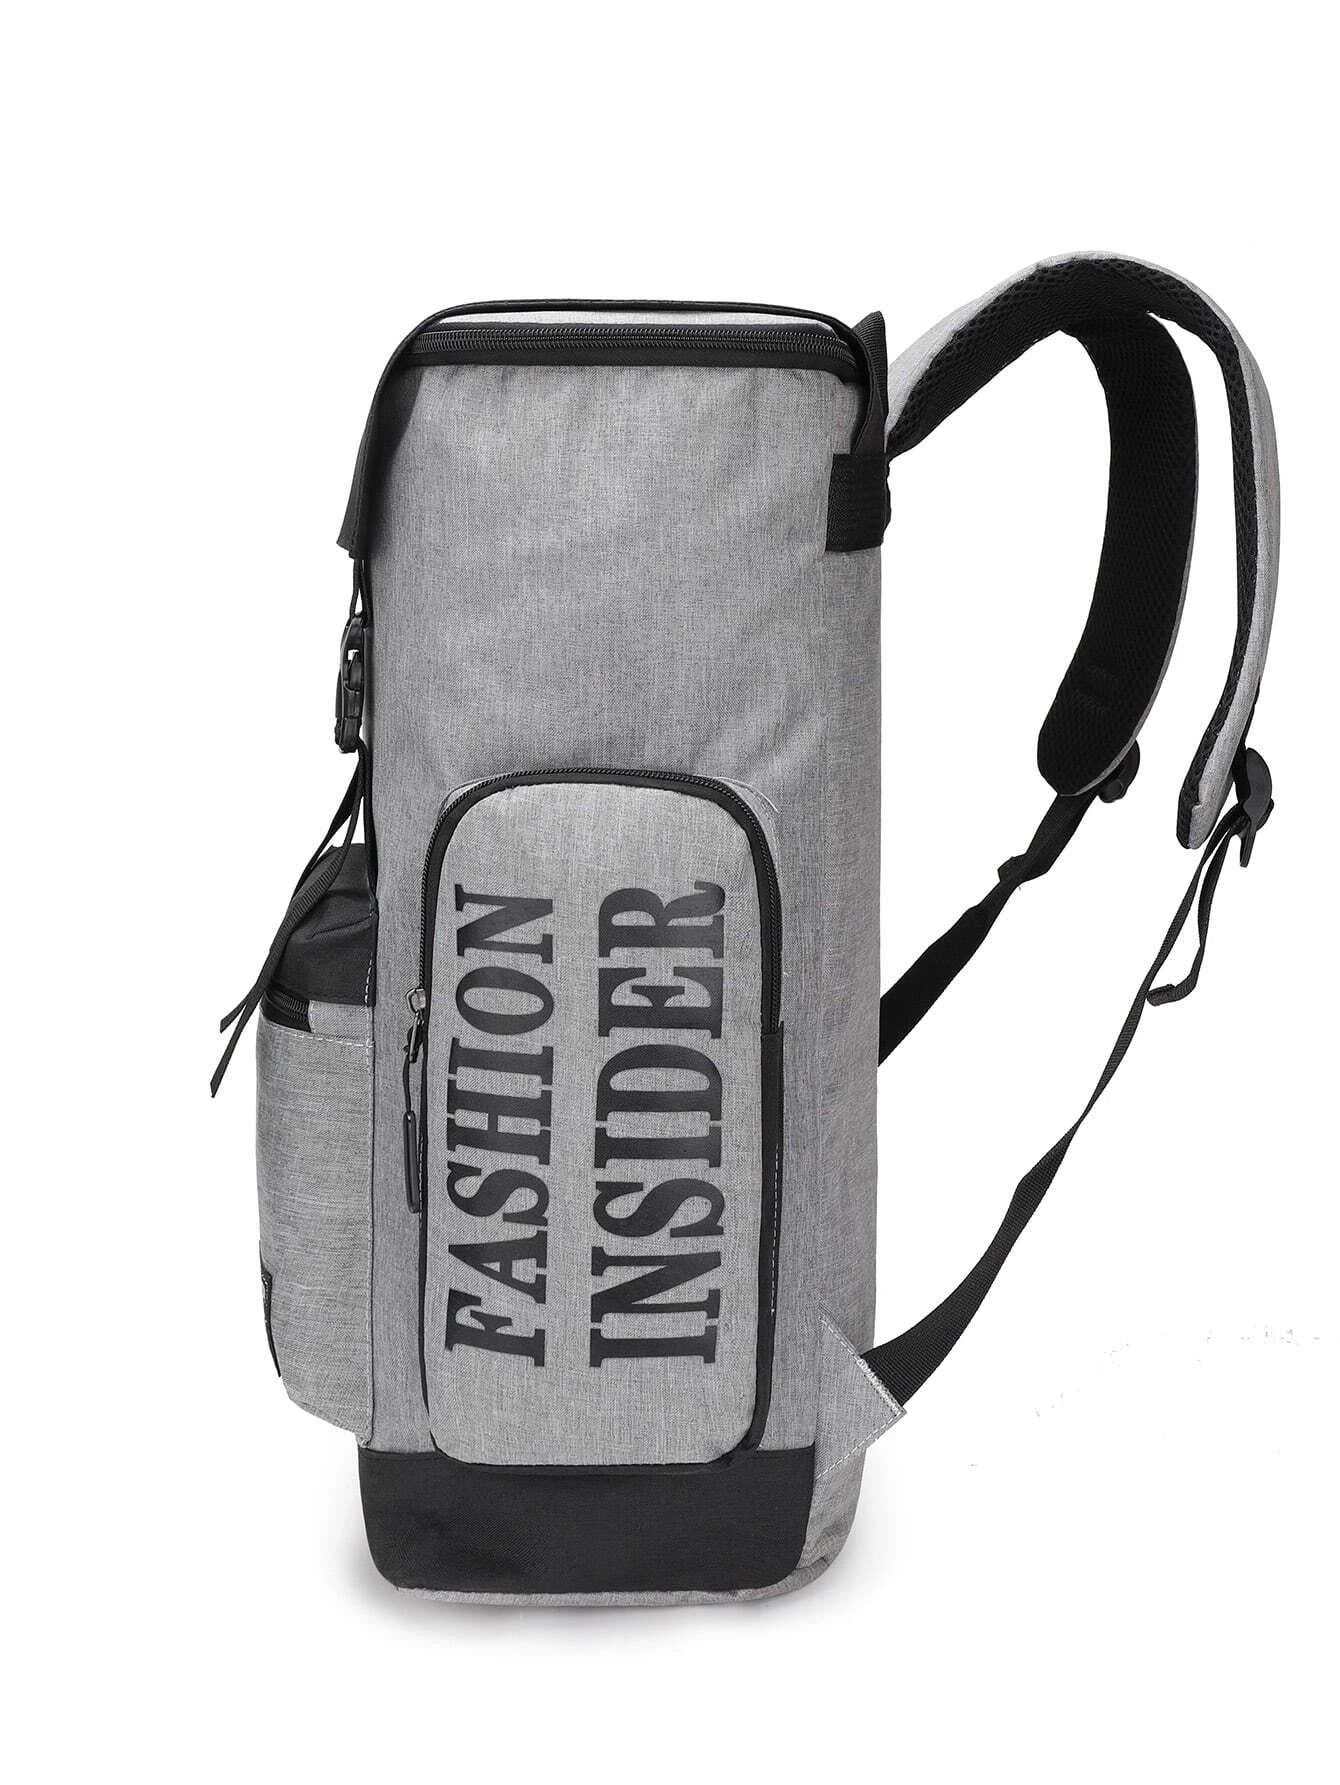 Two Tone Travel Bag Letter Patch Decor Buckle Design Multi-Pocket